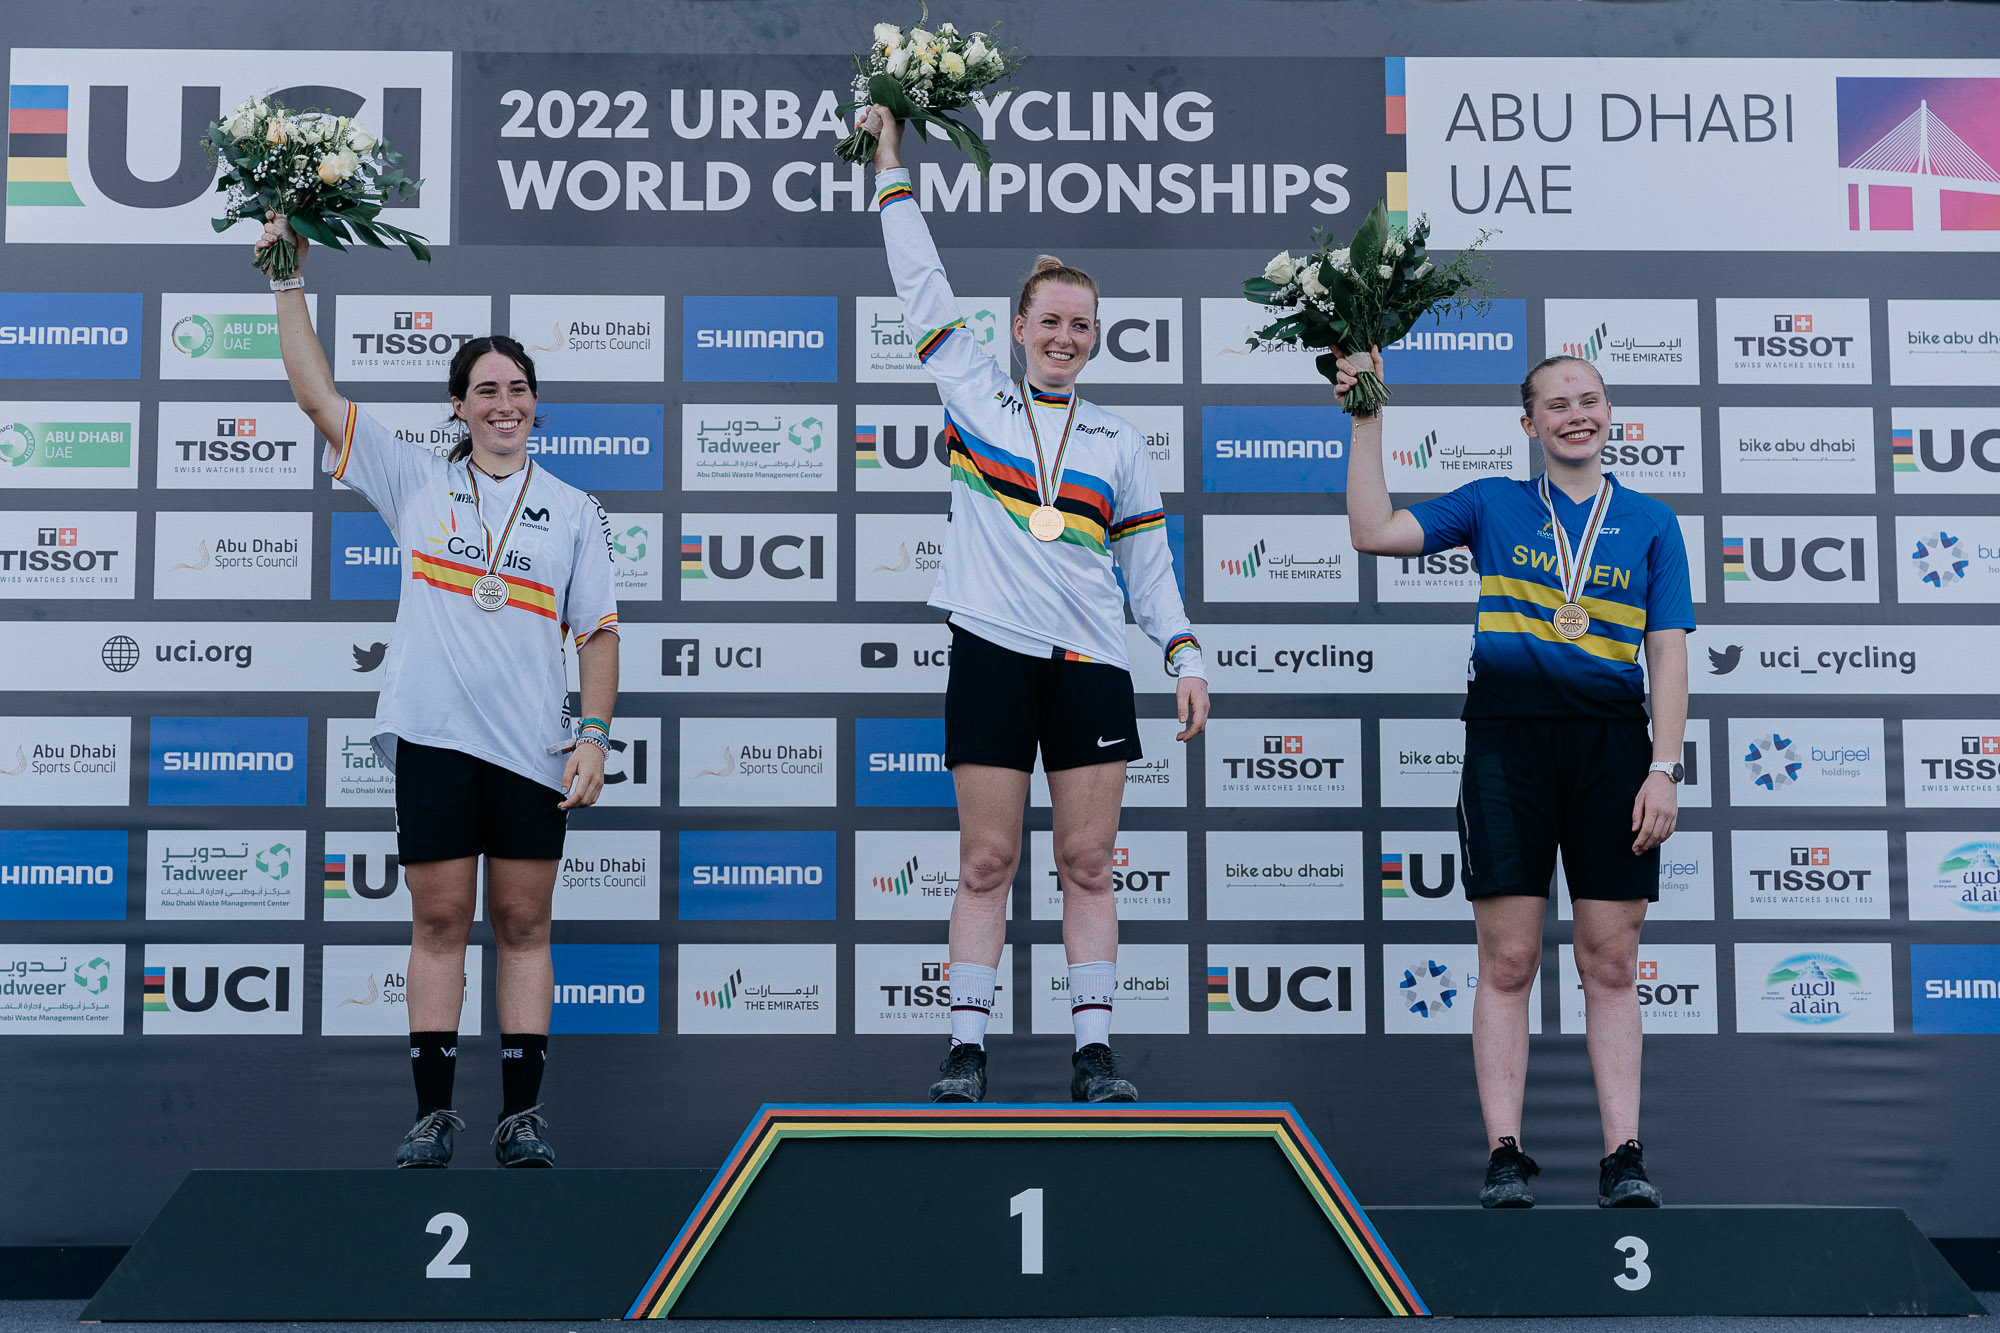 Podium Élite Femenino Campeonato del Mundo Trial UCI 2022 Abu Dhabi